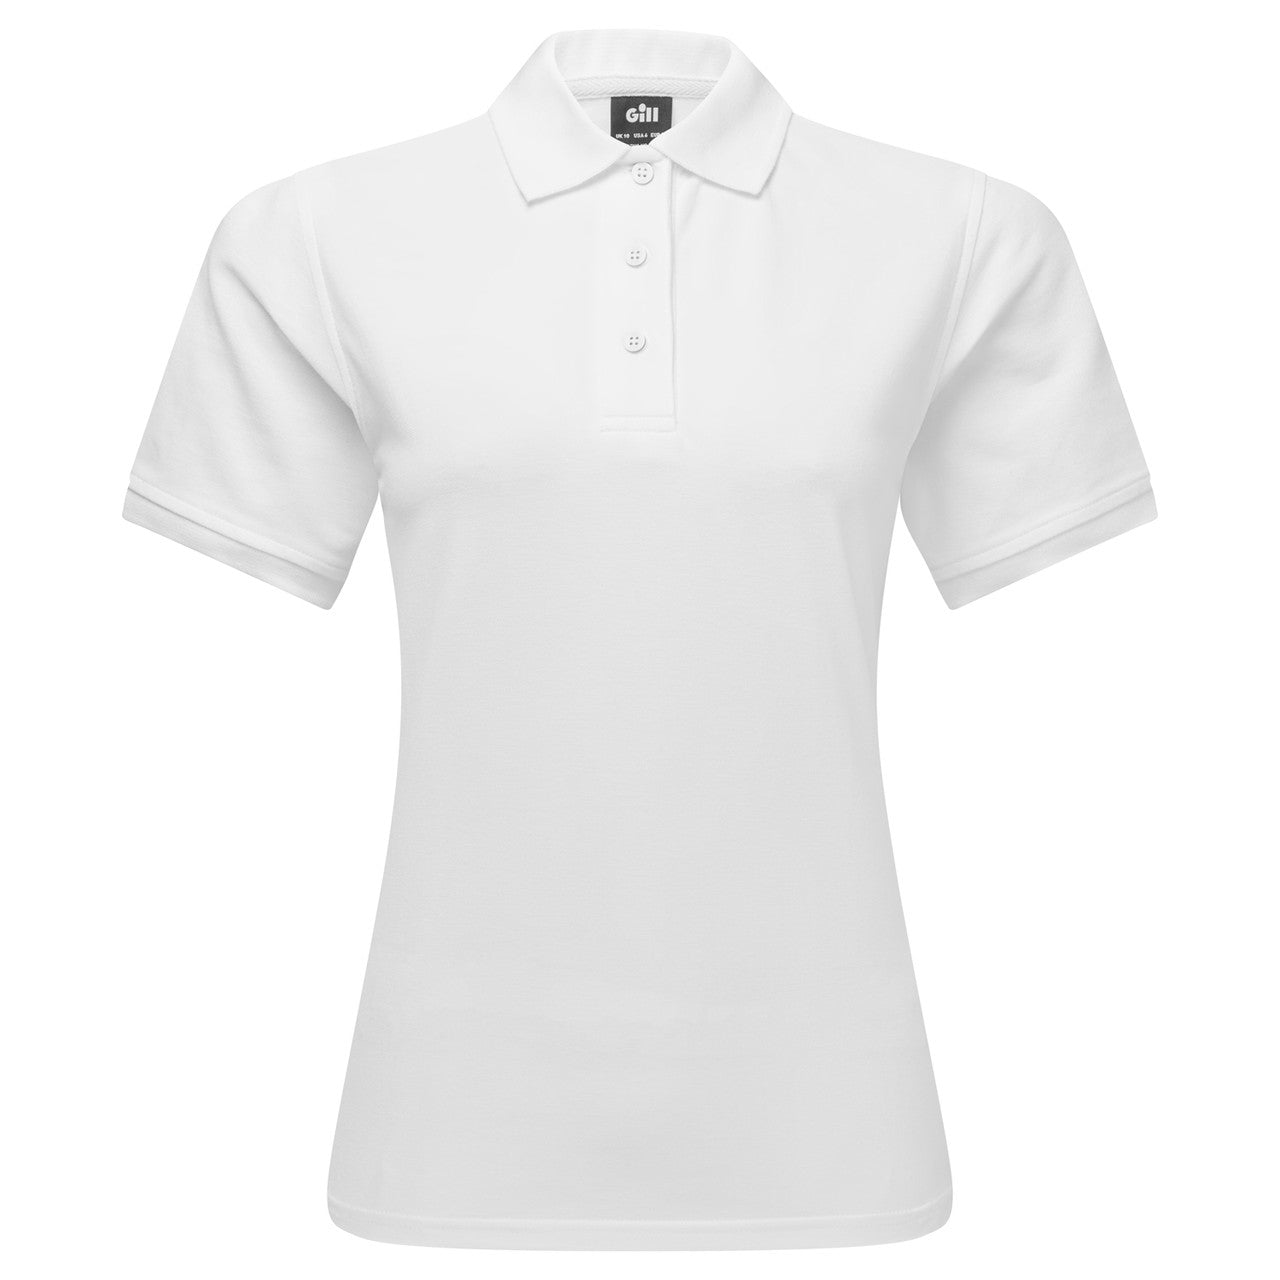 Gill - Women's Polo Shirt